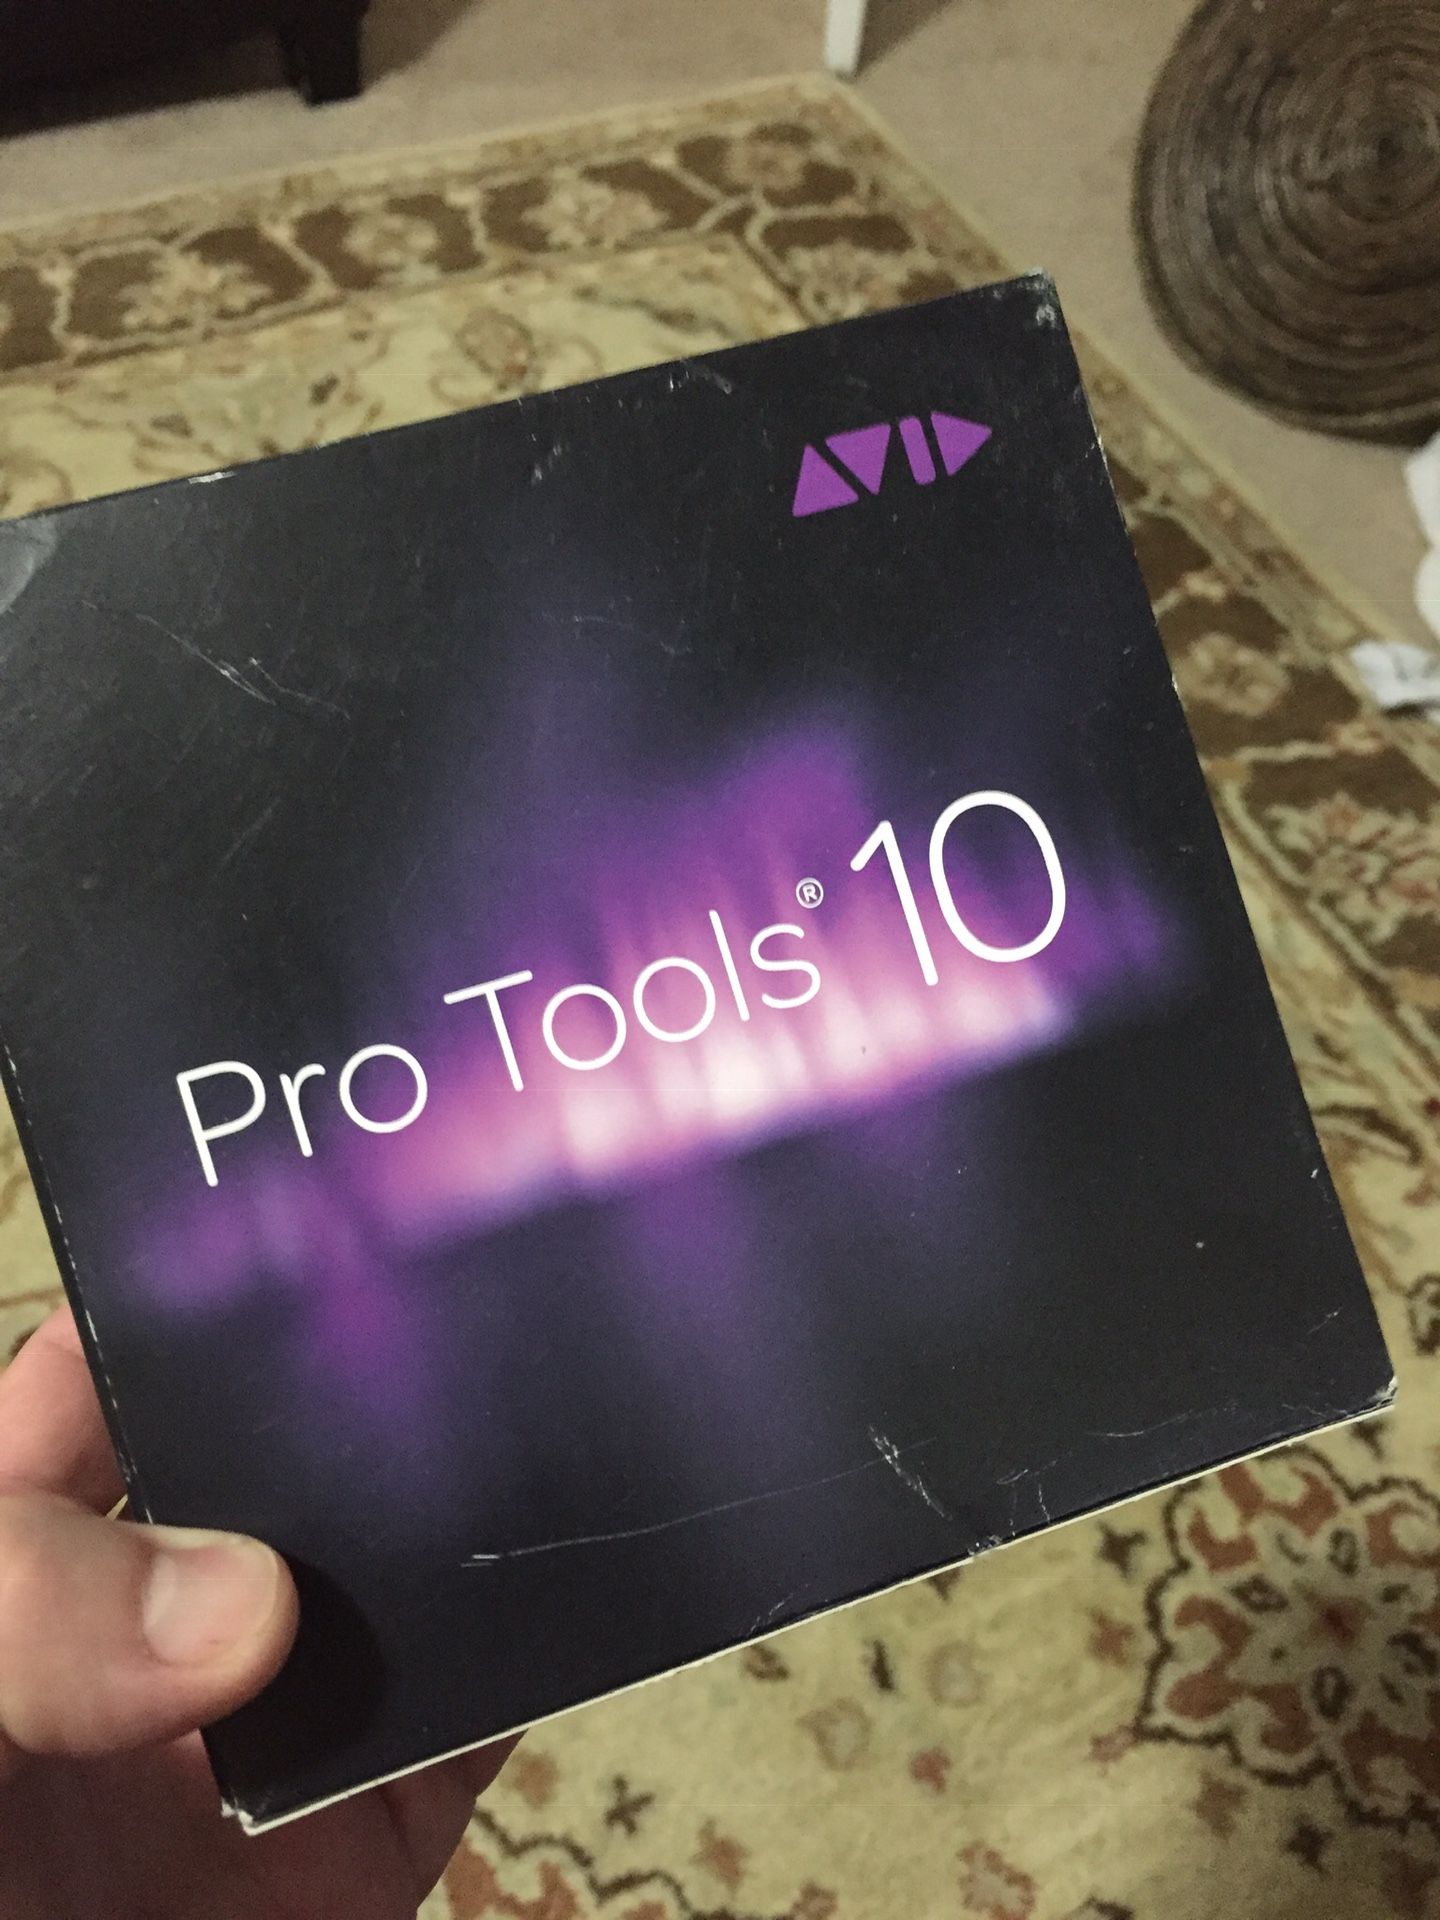 Pro tools 10